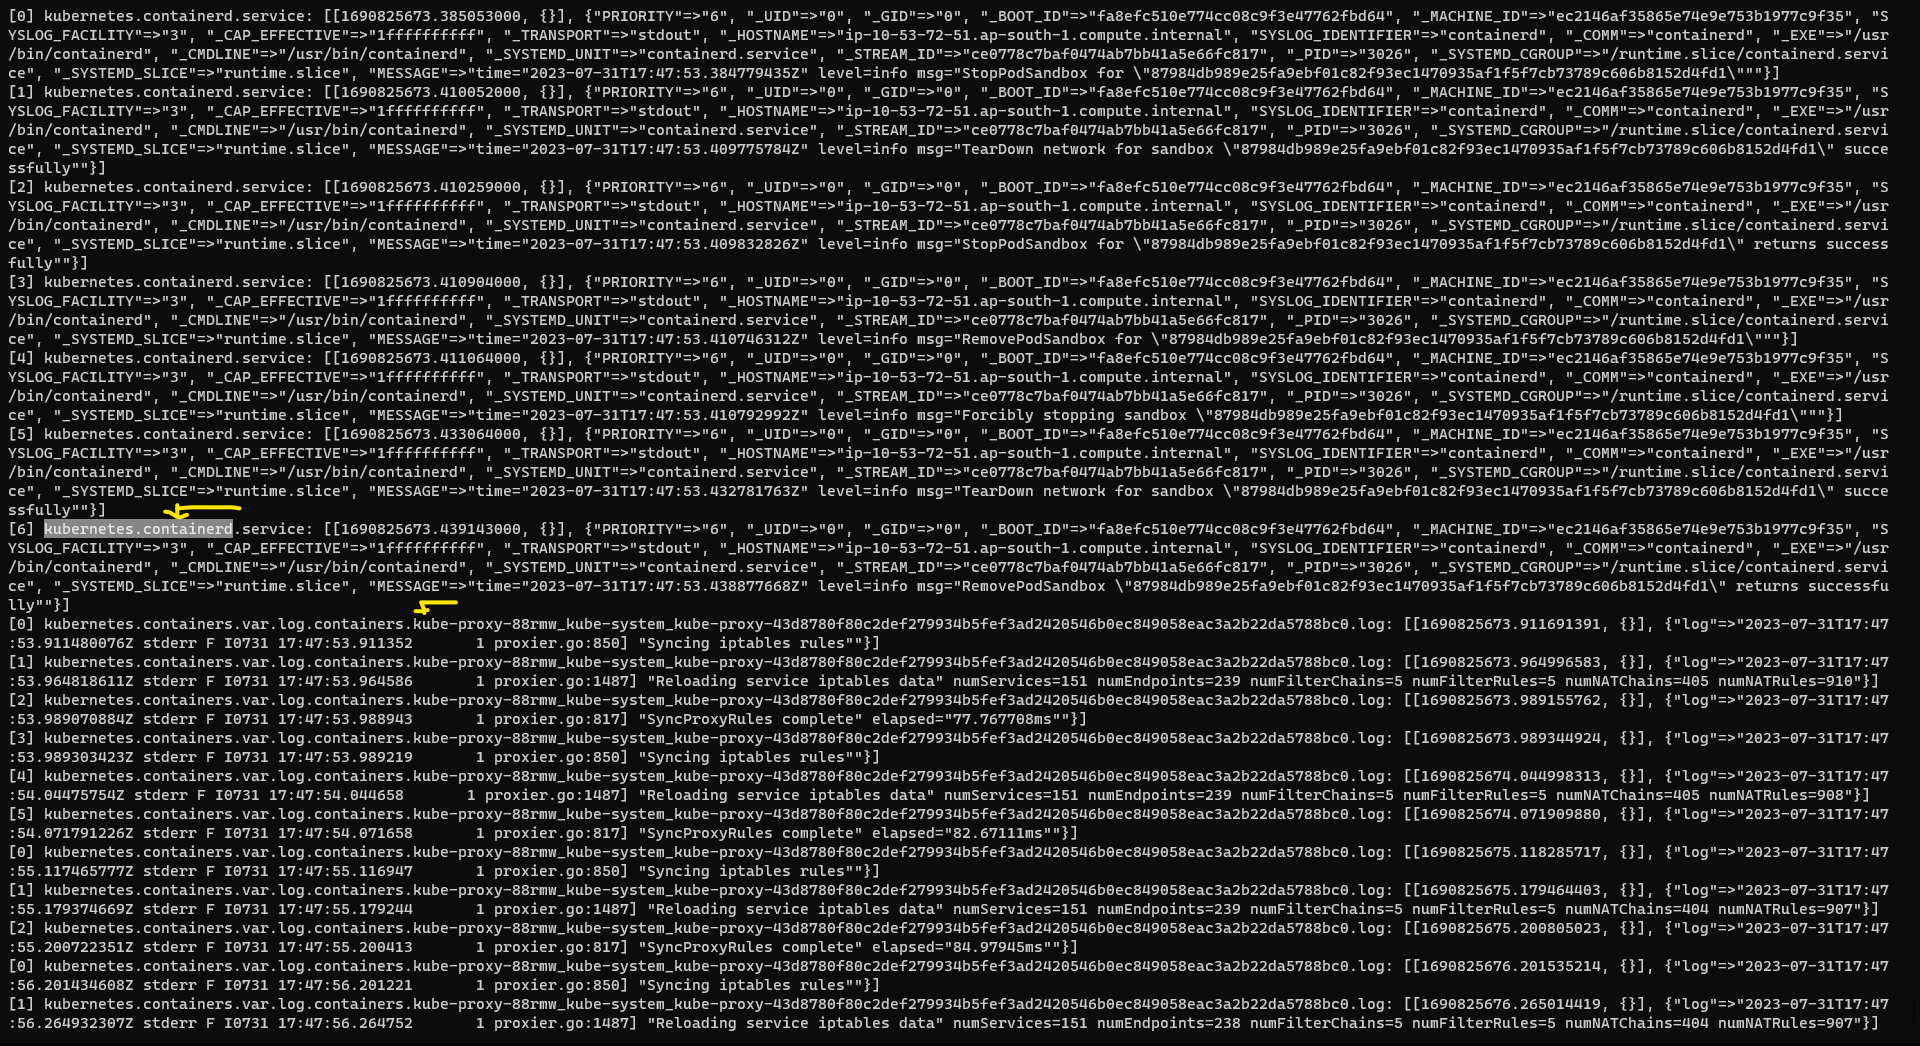 screenshot of logs output